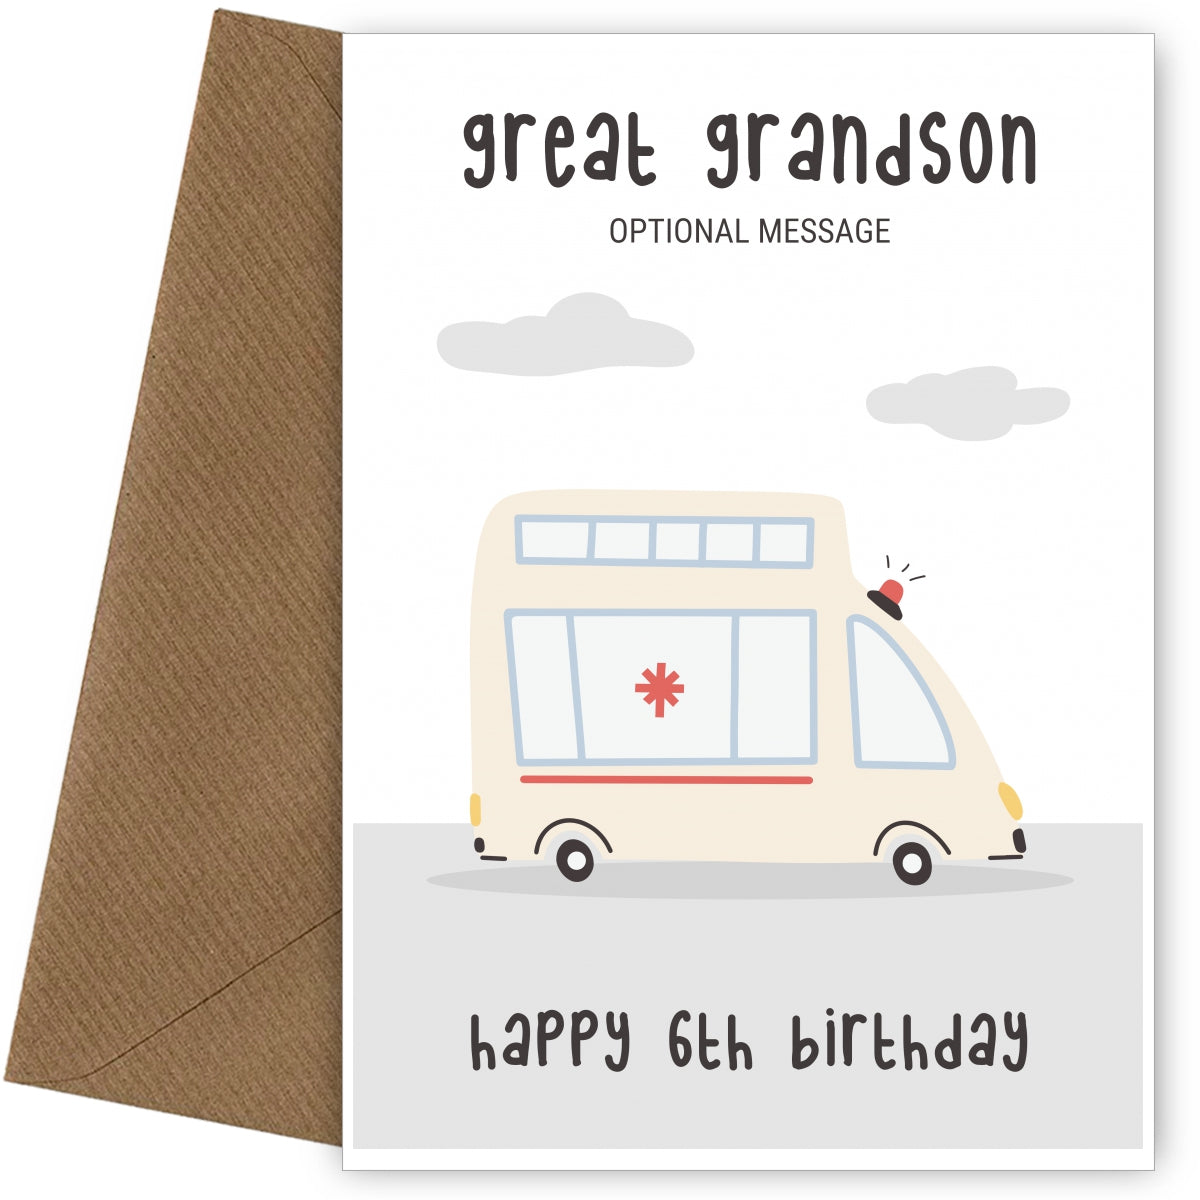 Fun Vehicles 6th Birthday Card for Great Grandson - Ambulance